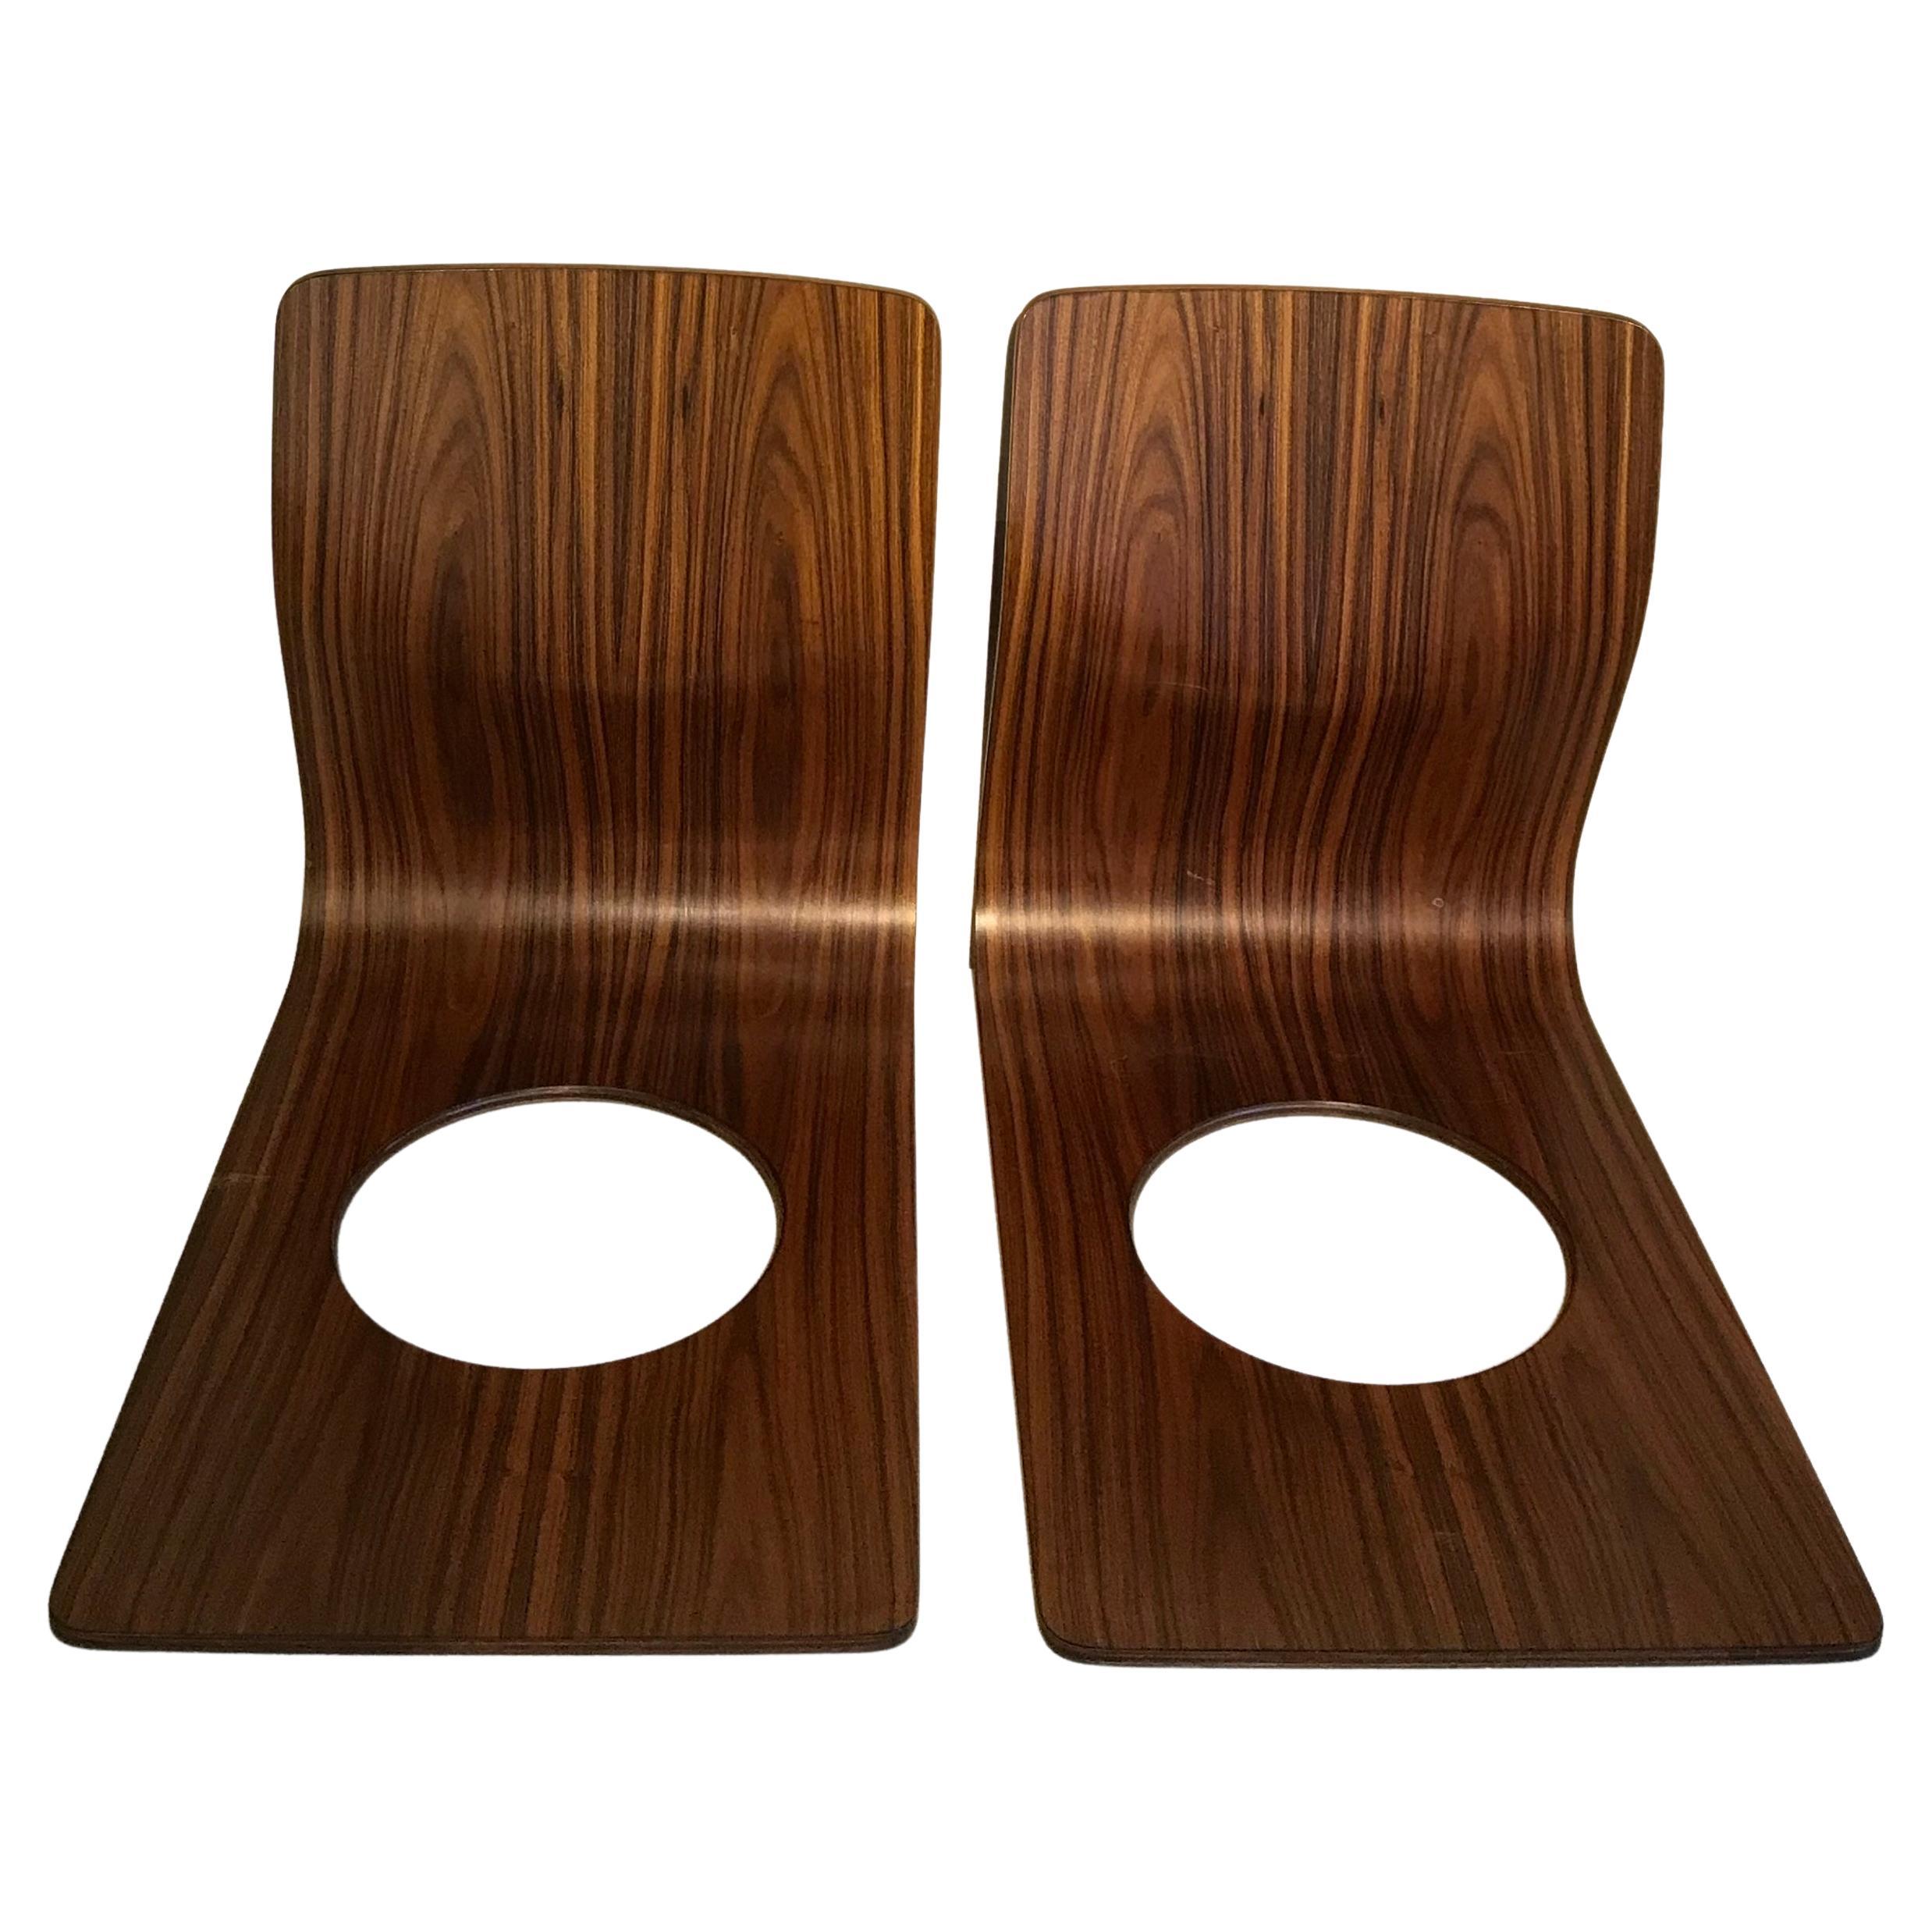 Japanese Style Rosewood Plywood Seats